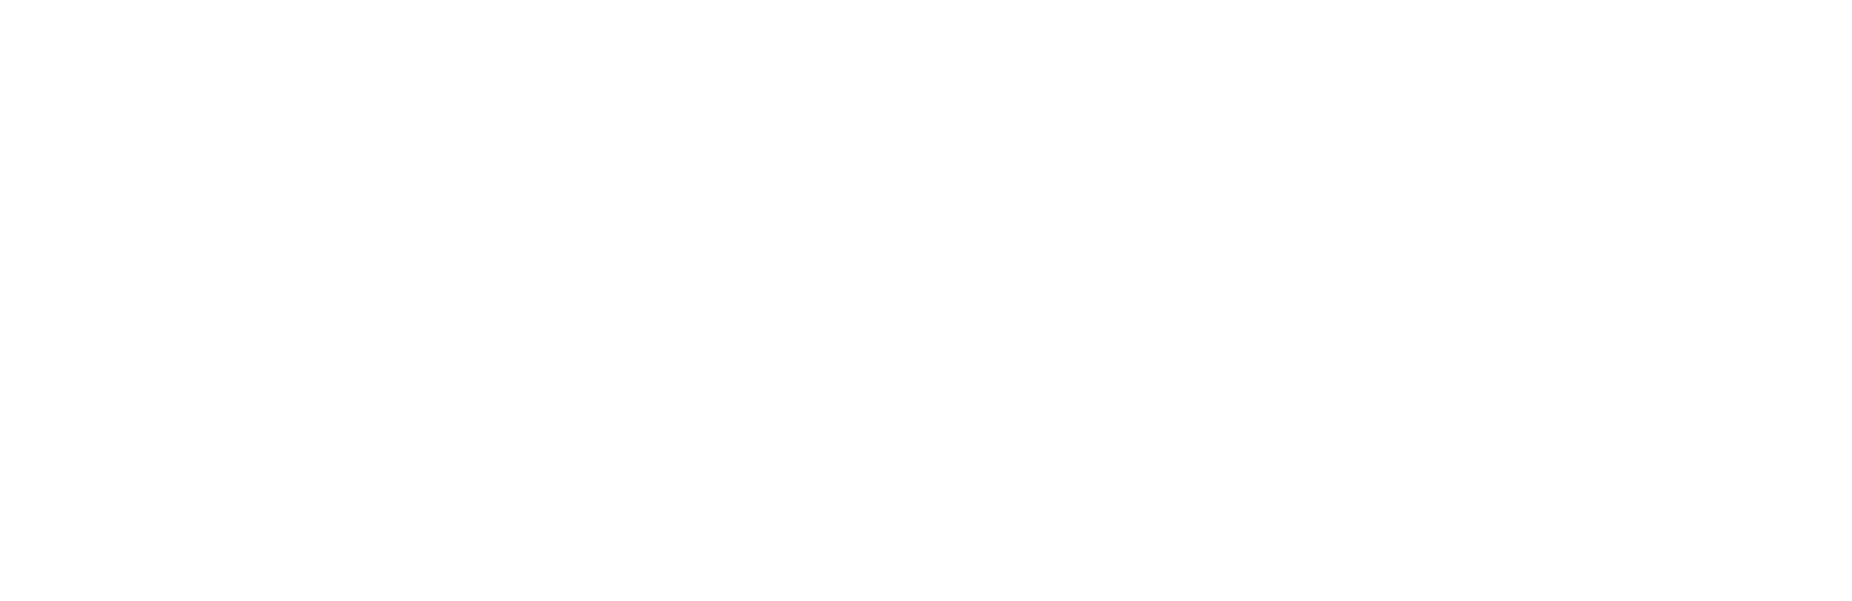 Living Lakes Canada logo